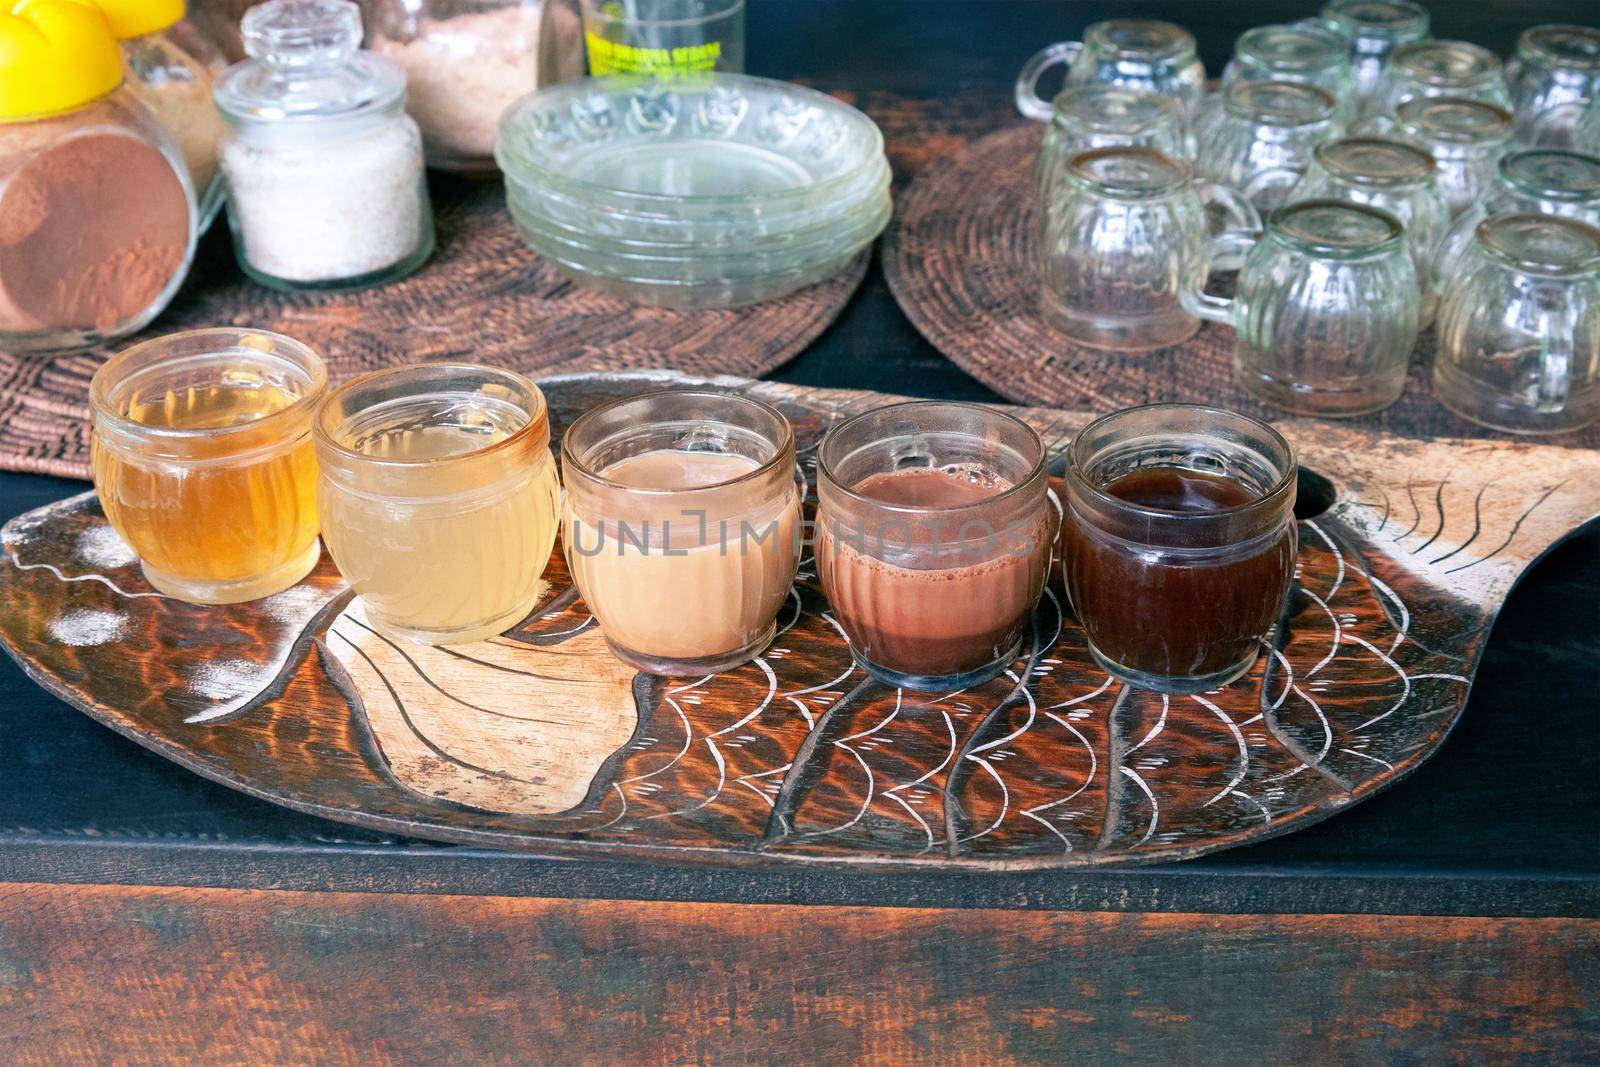 coffee, luwak coffee, fruit and herb tea tasting set at Luwak coffee farm, Bali, Indonesia by zhu_zhu